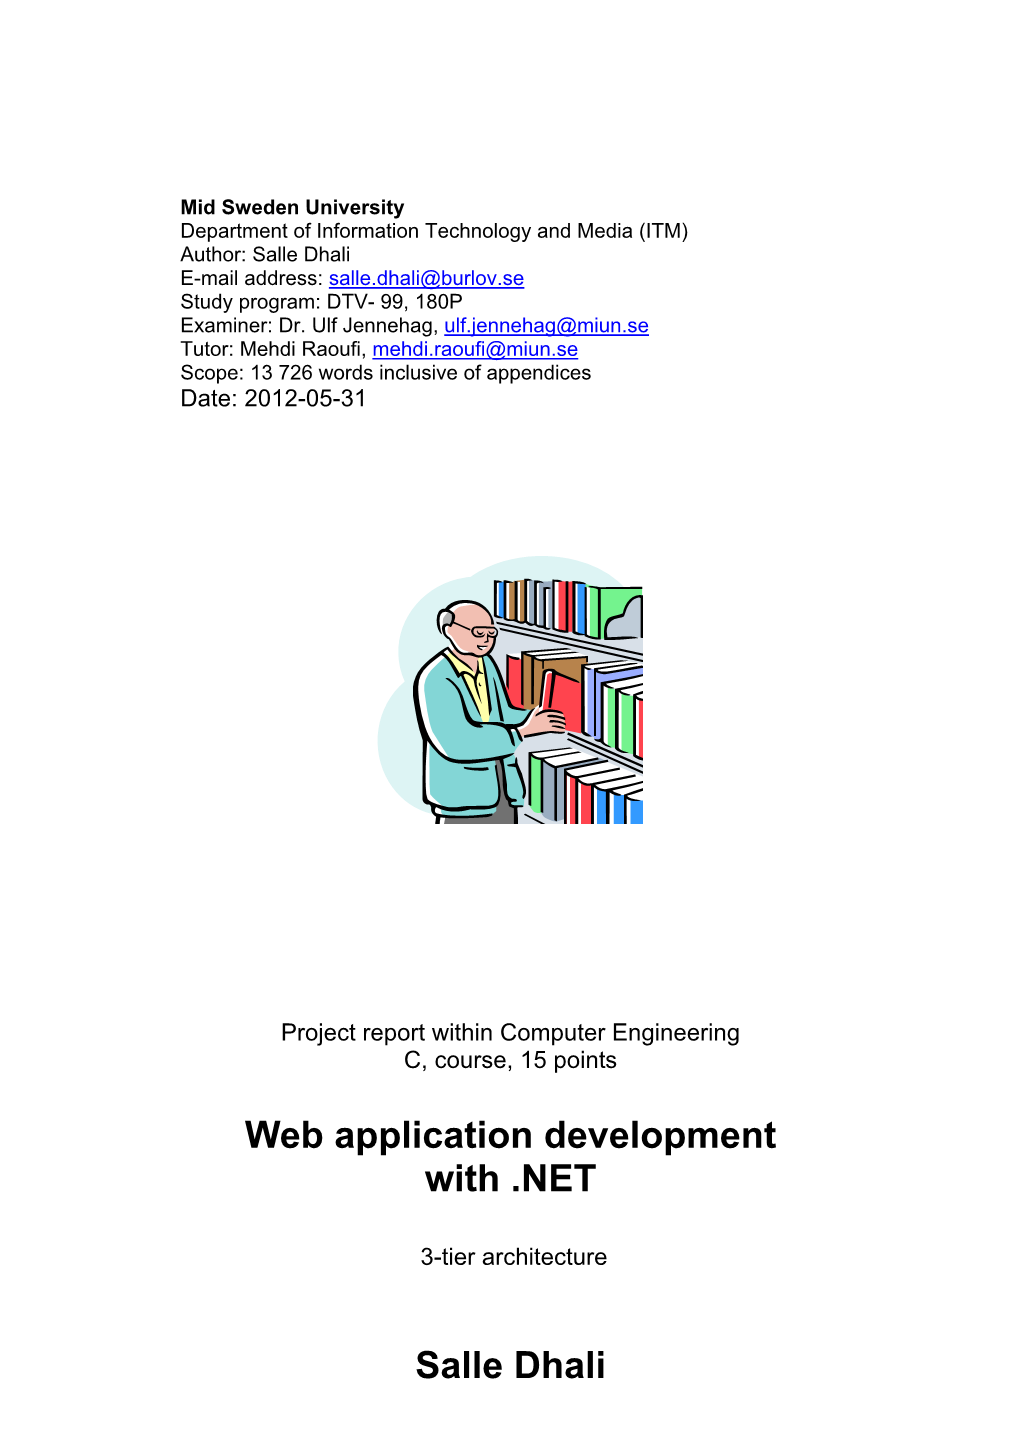 Web Application Development with .NET Salle Dhali